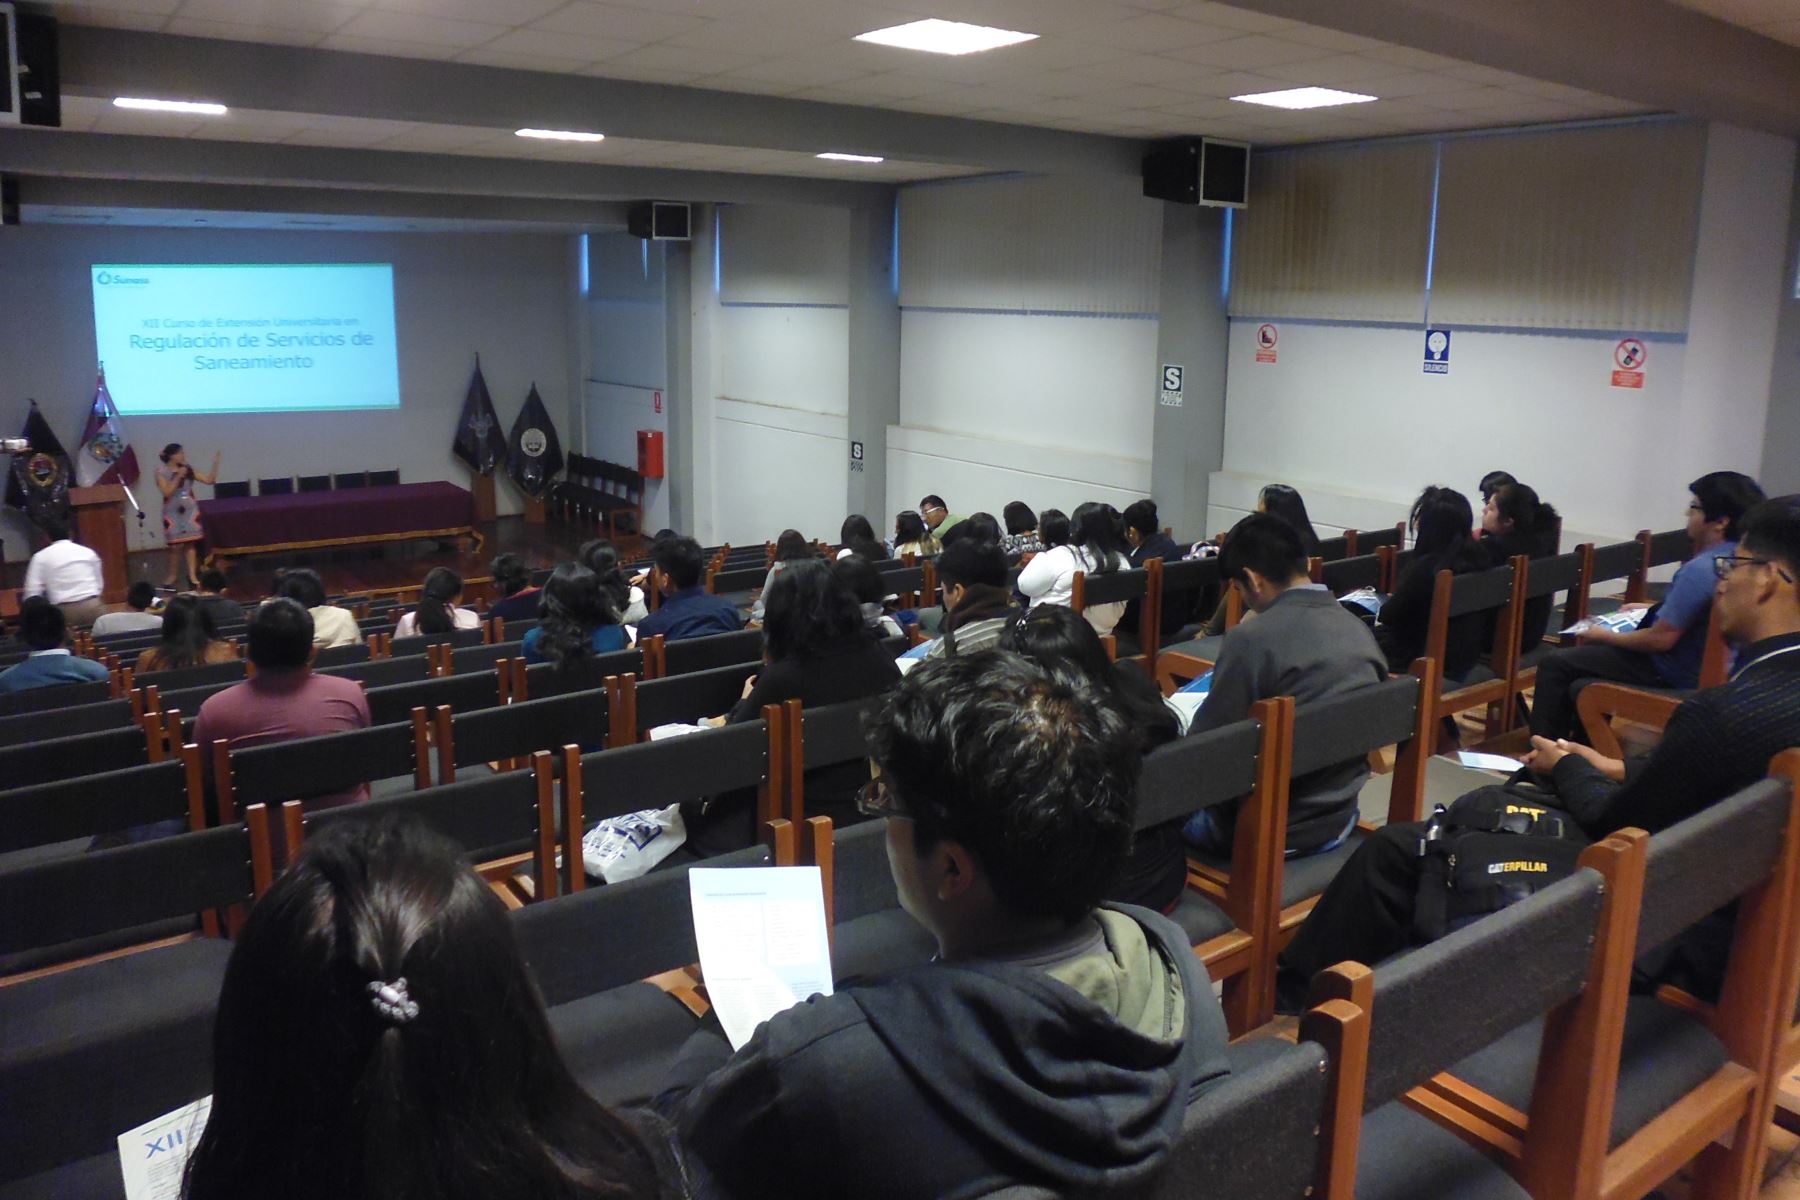 Estudiantes de Arequipa postulan a curso de regulación en servicio de saneamiento. ANDINA/Difusión